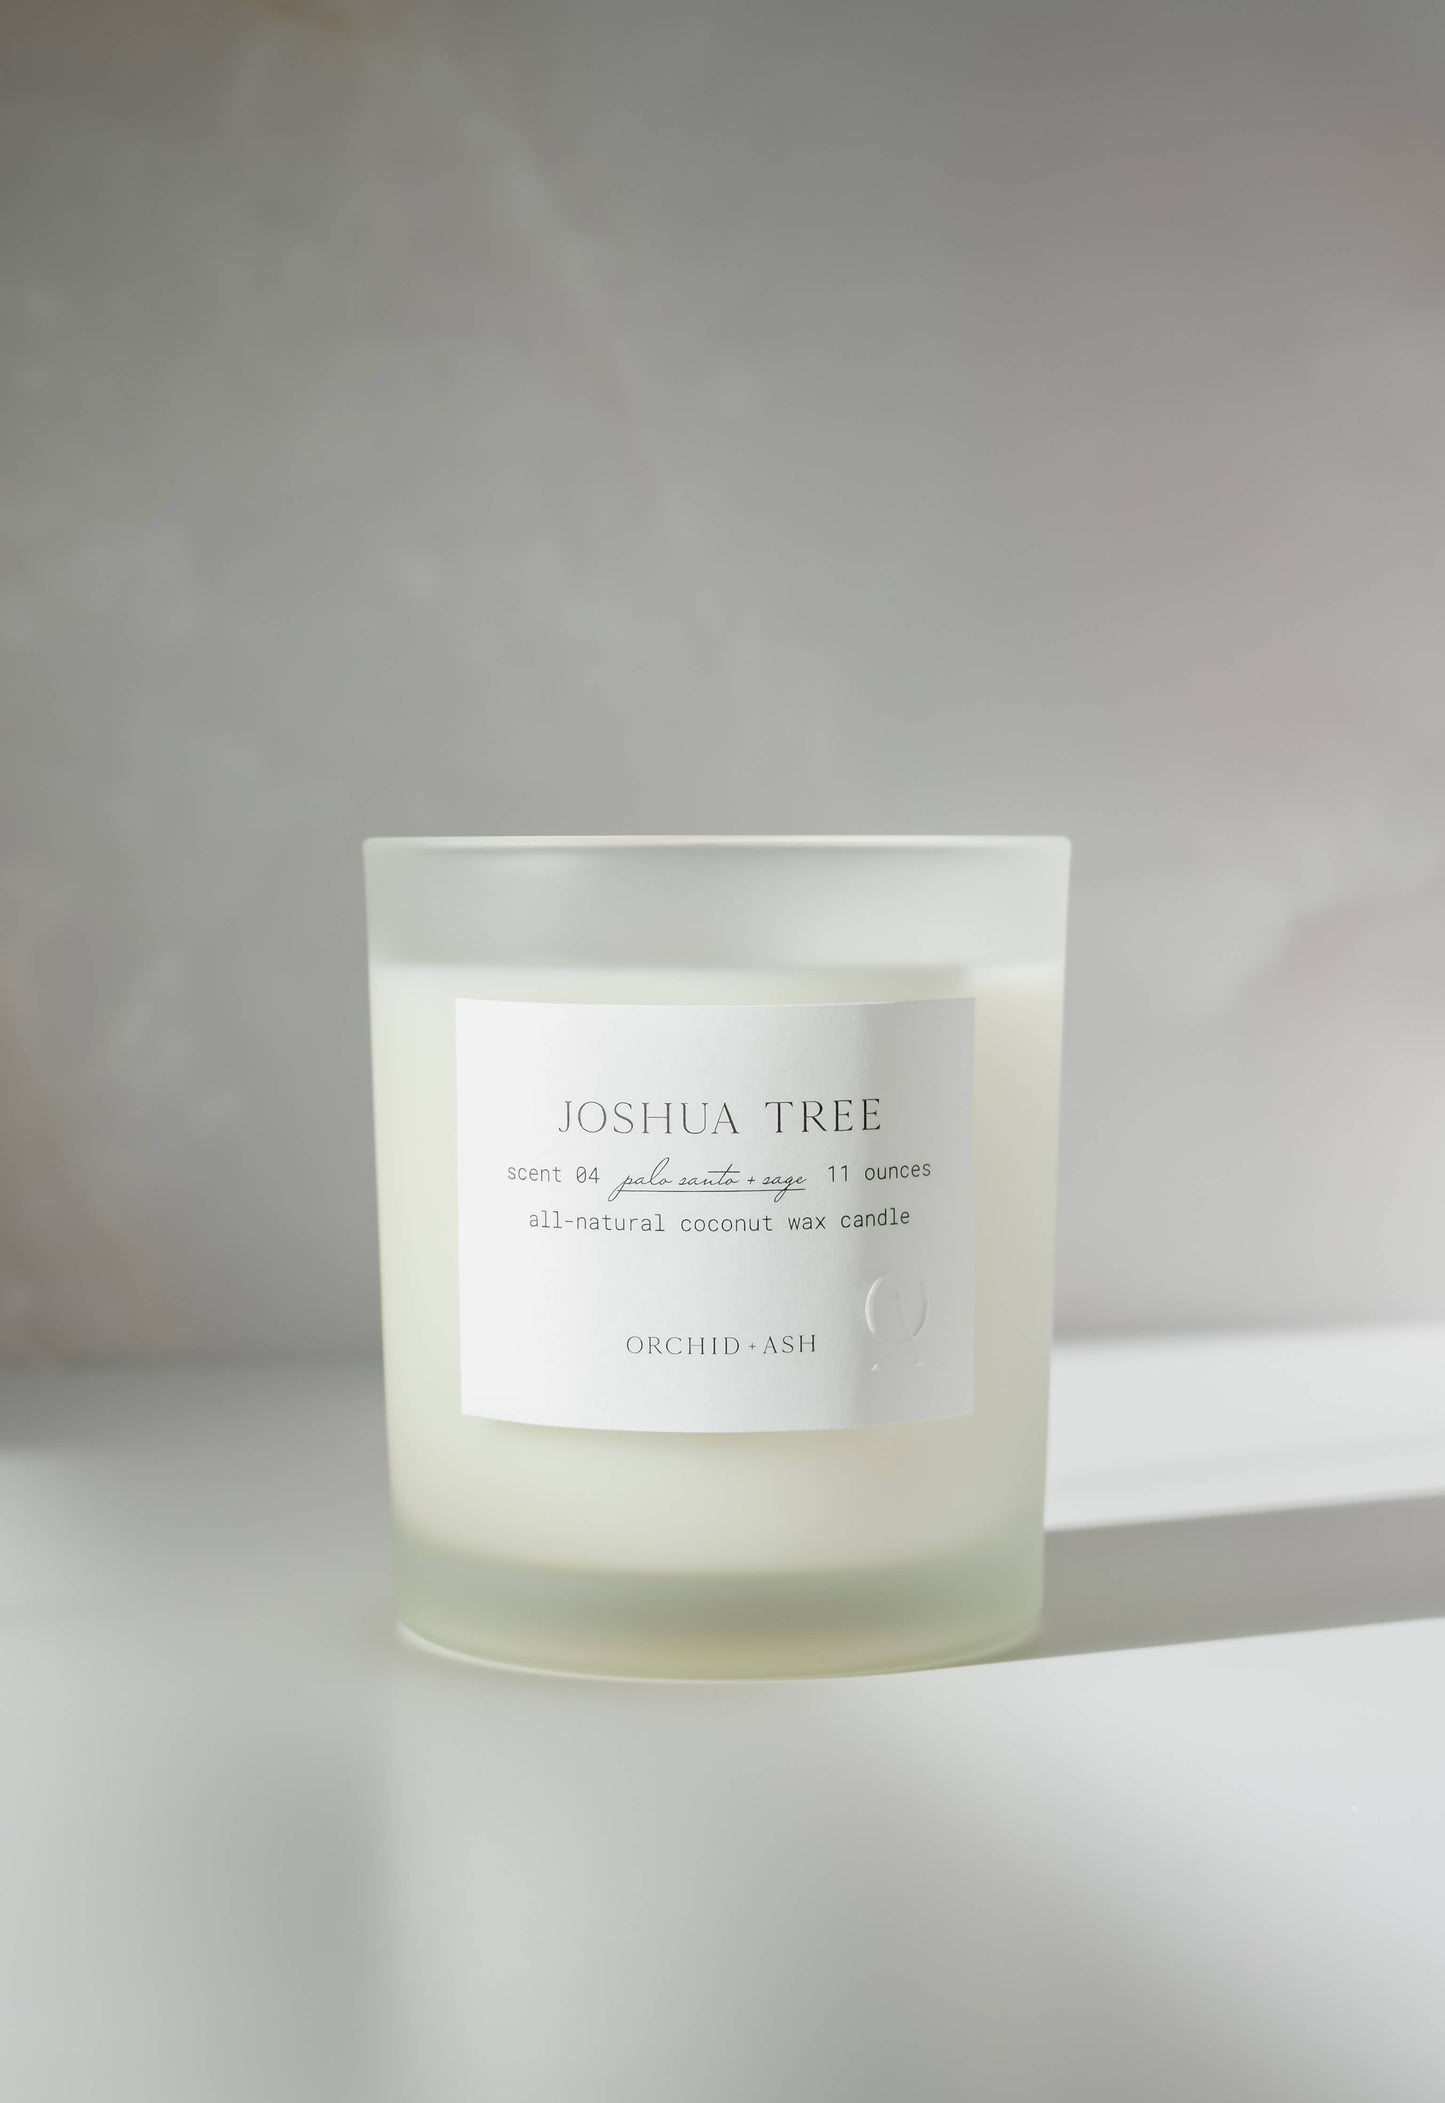 JOSHUA TREE | palo santo + sage | all-natural candle